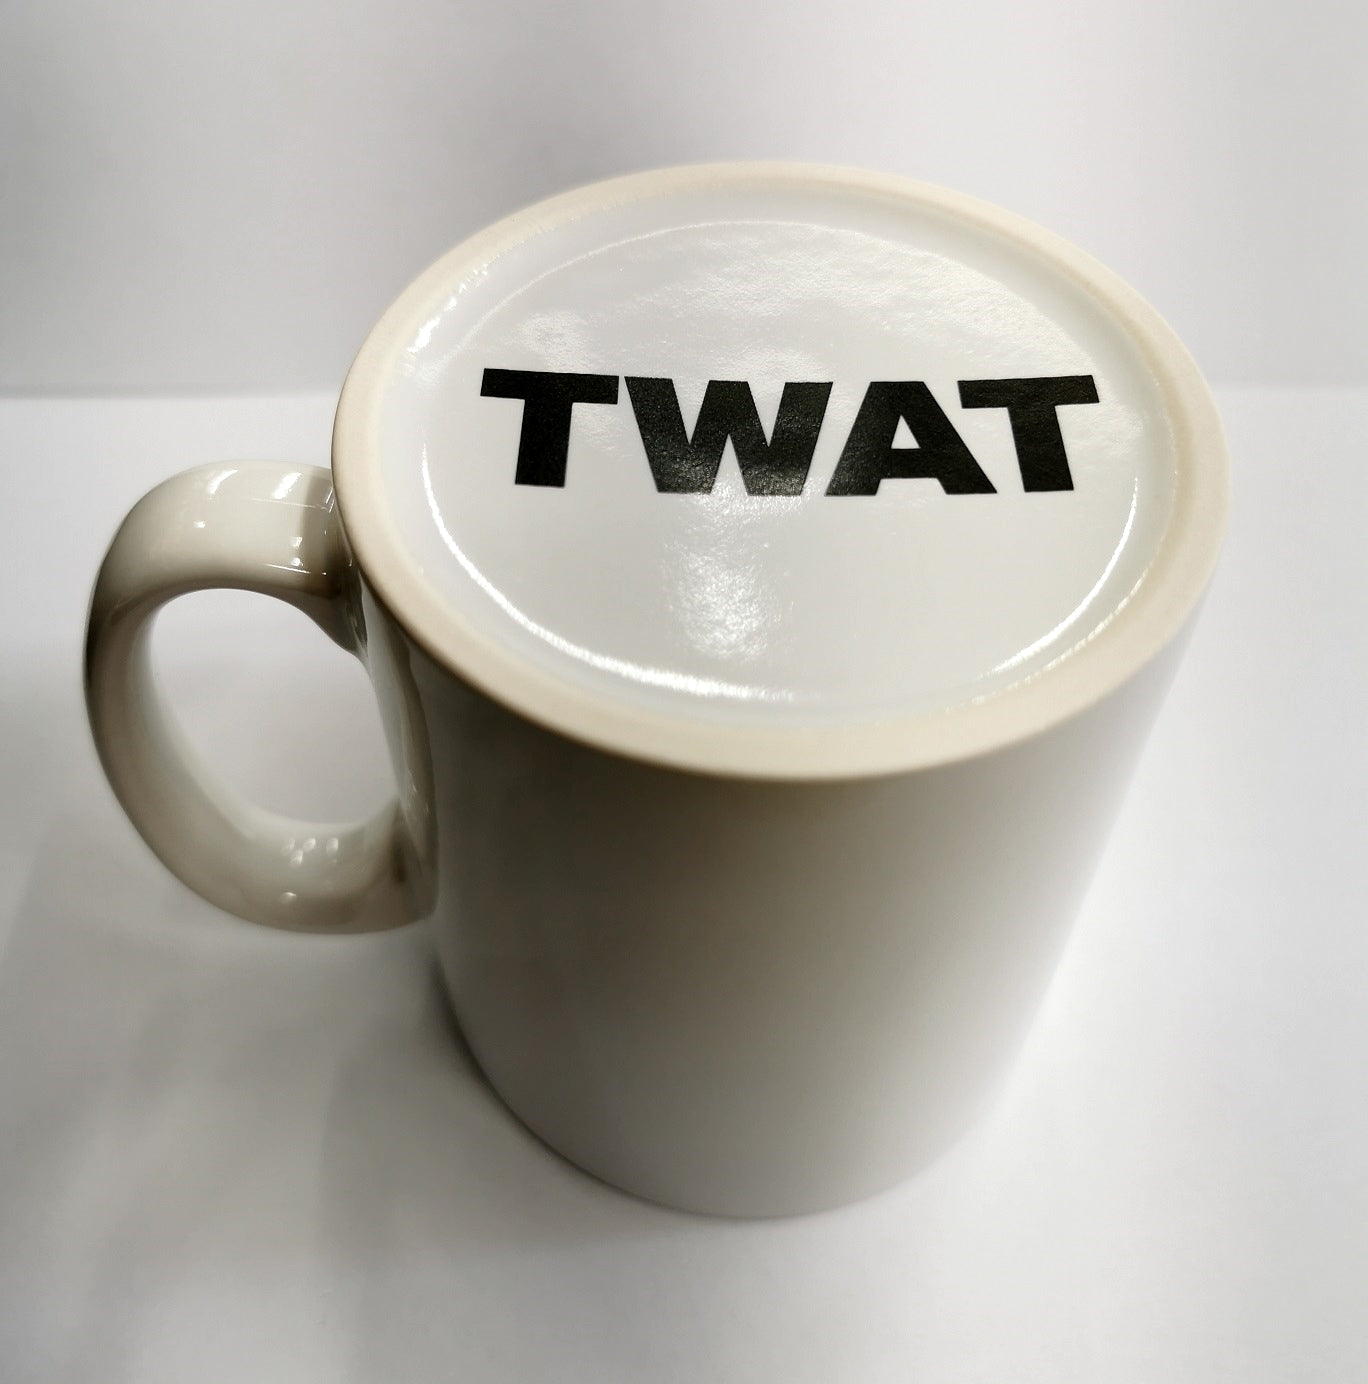 Secret Twat Mug ~ Rude Hidden Profanity Joke Mug! ~ Office Santa Novelty Gift